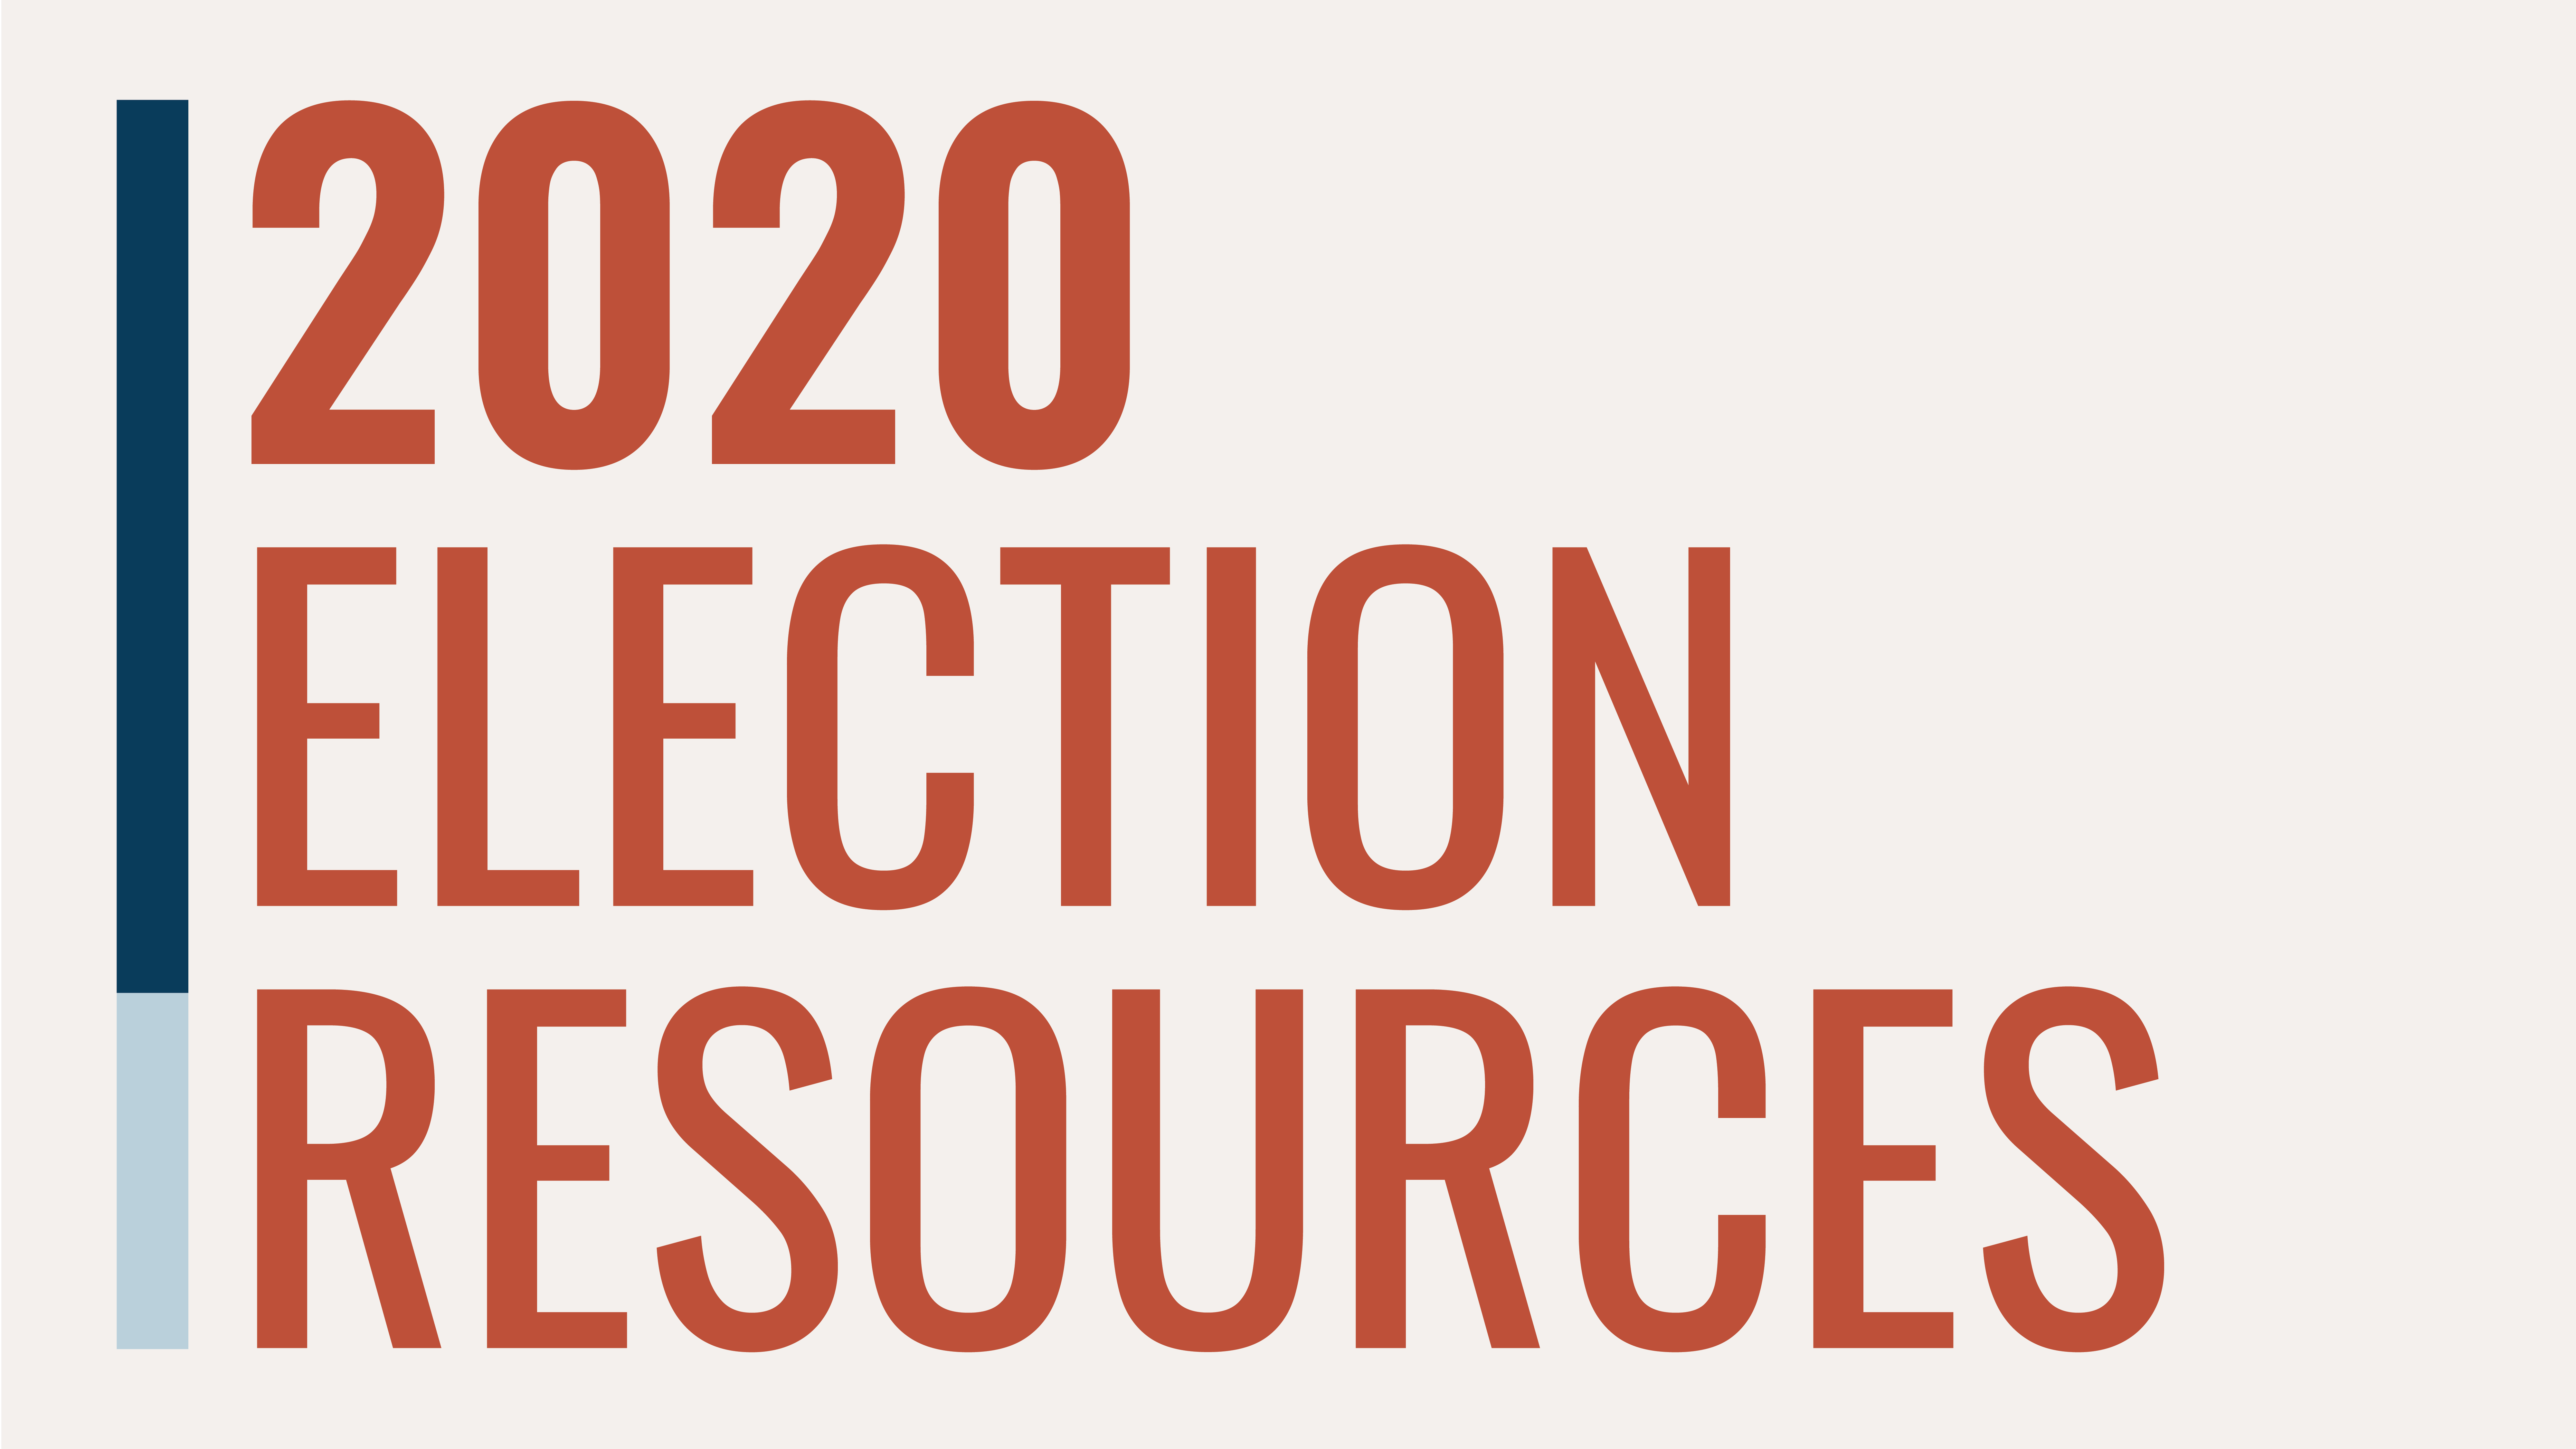 2020 Election Resources TG Web 1920X1080